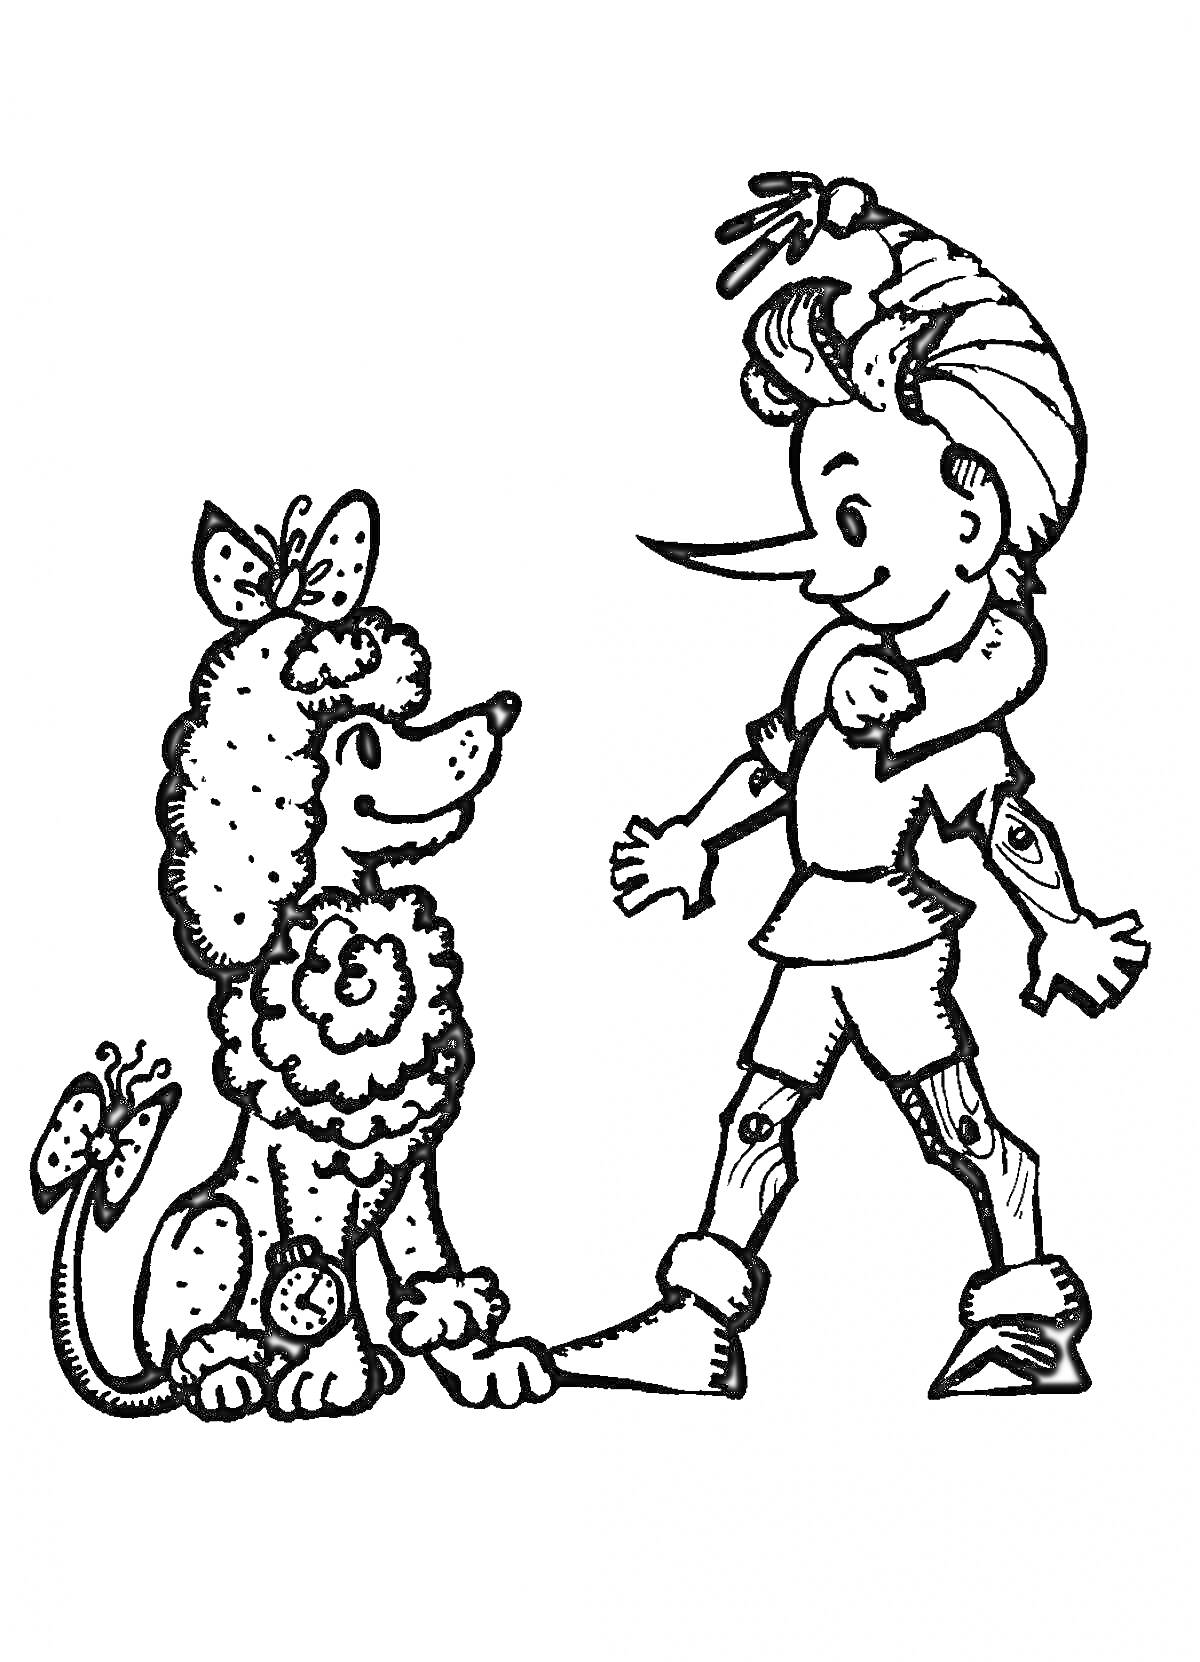 Раскраска Буратино и собака с бантиками